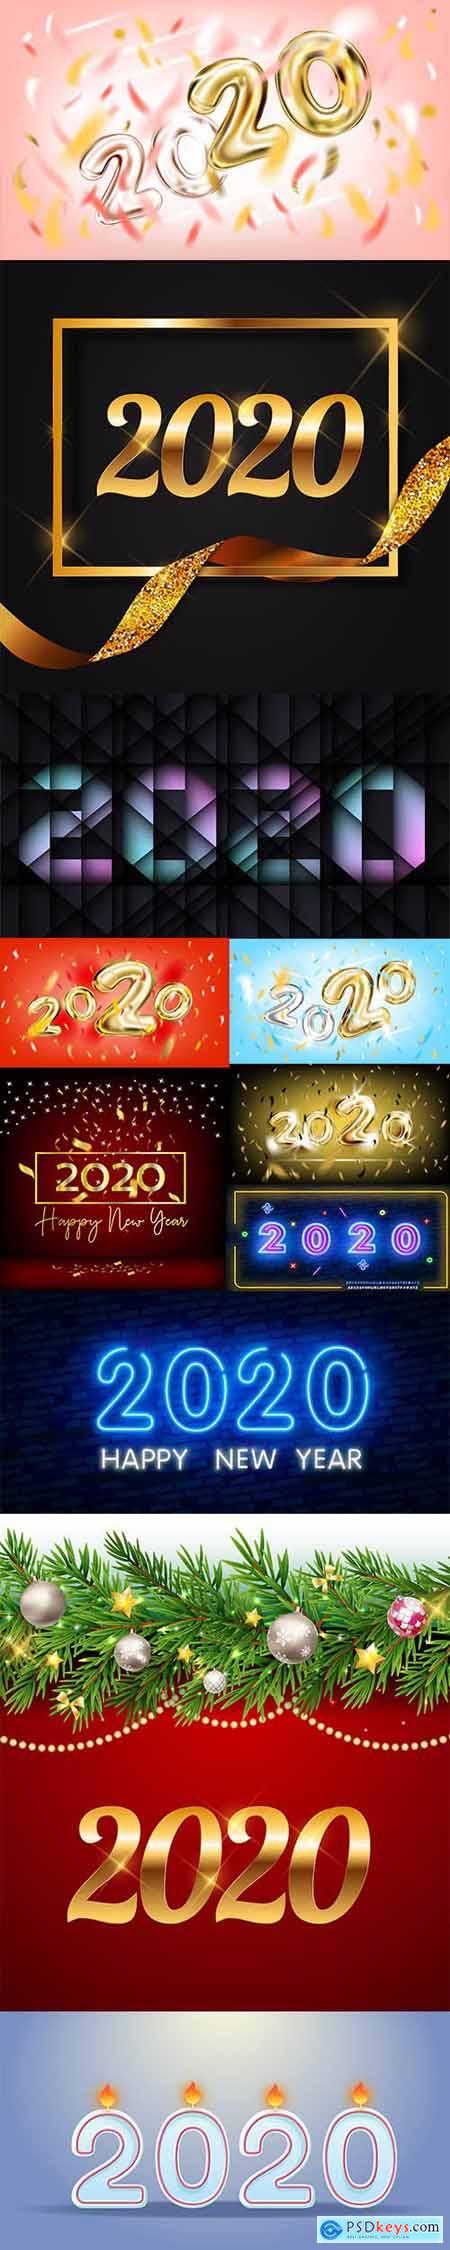 Set of Happy New Year 2020 Illustrations